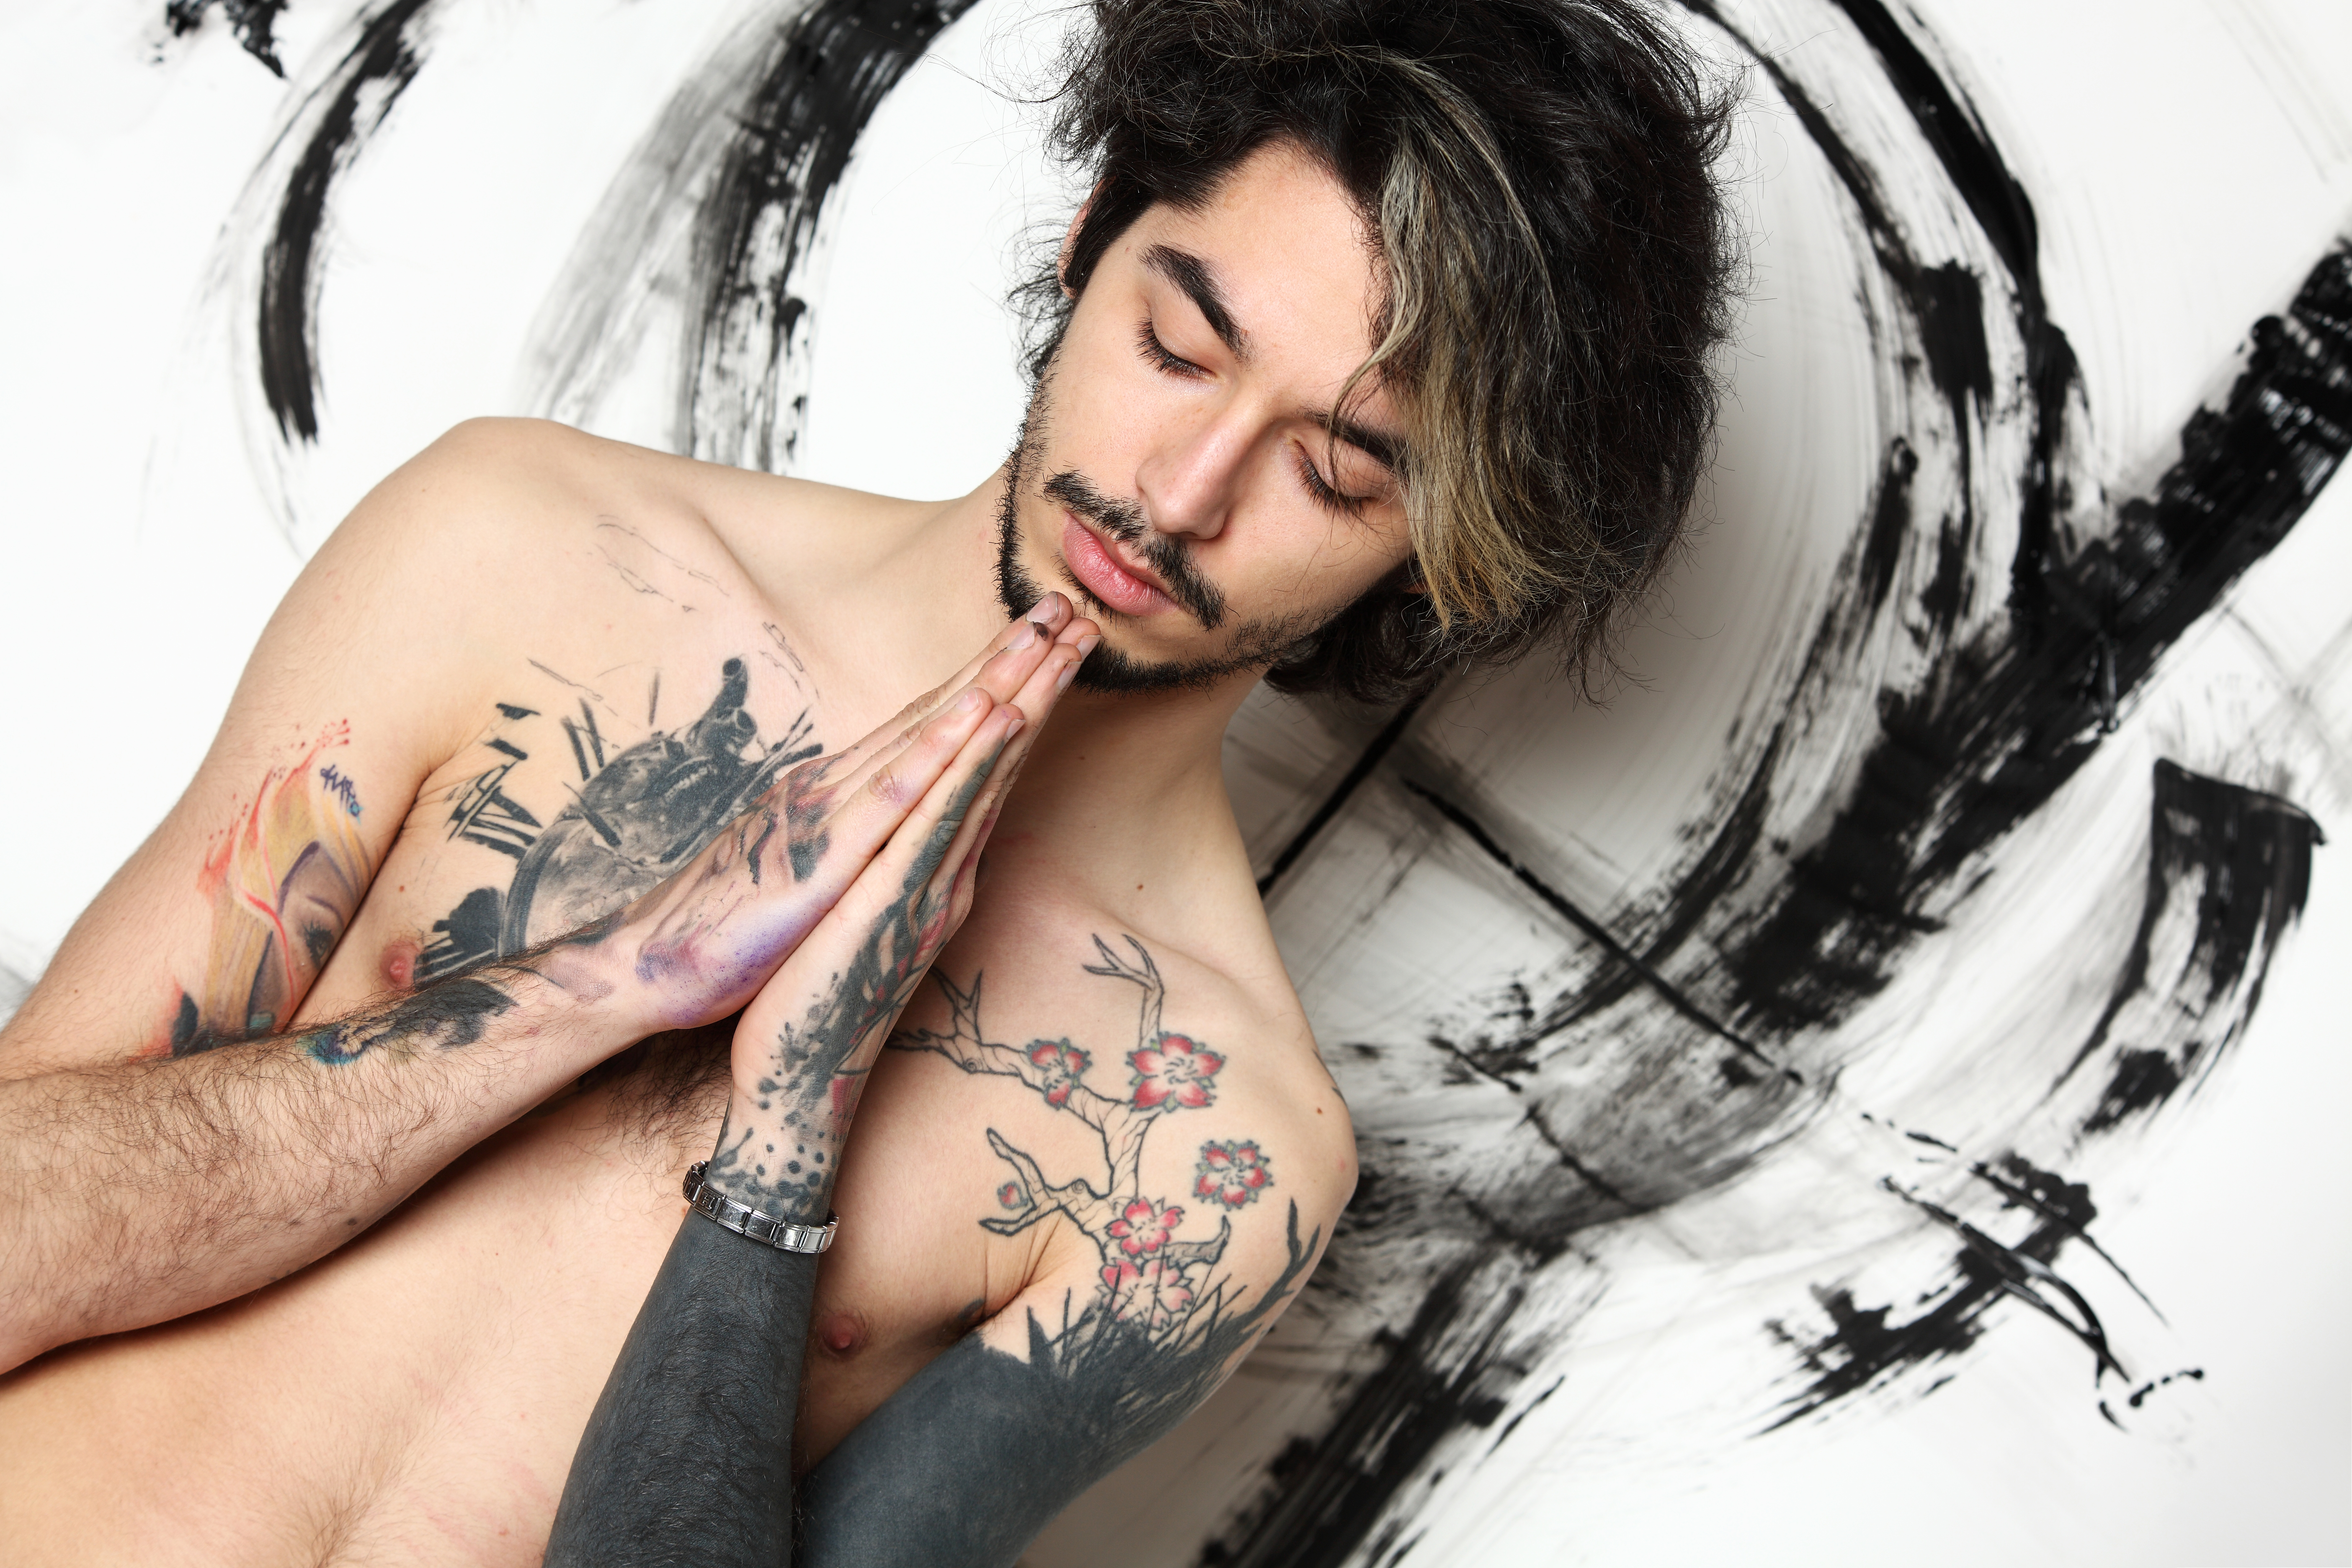 Massimo Piazzetta tattoo artist from Body Art mostra fotografica